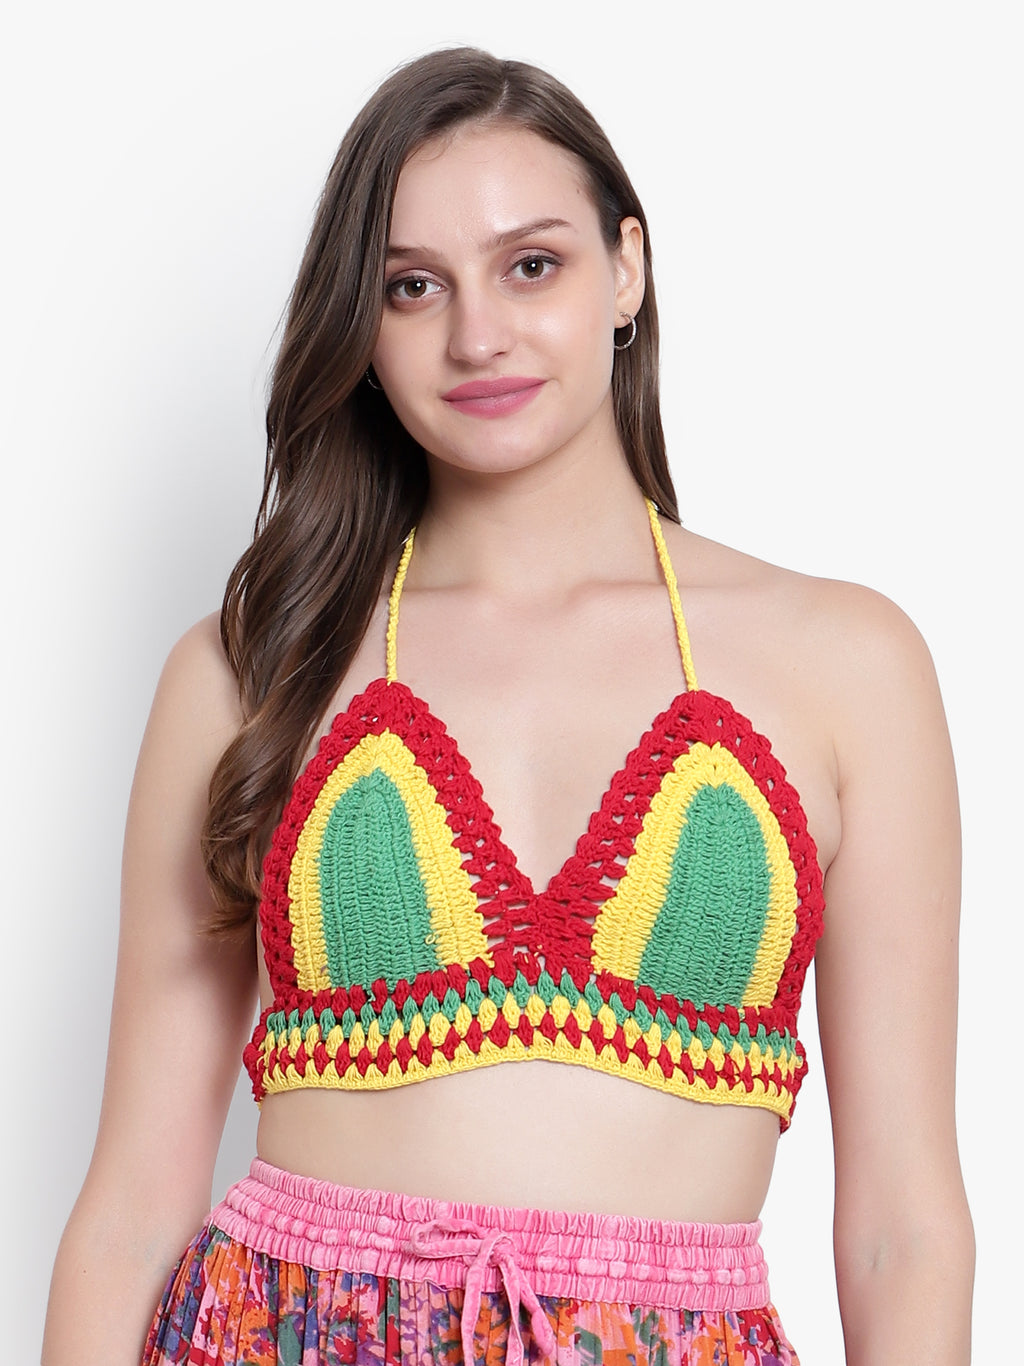 Velvi Figure Multi-color Crochet Bra